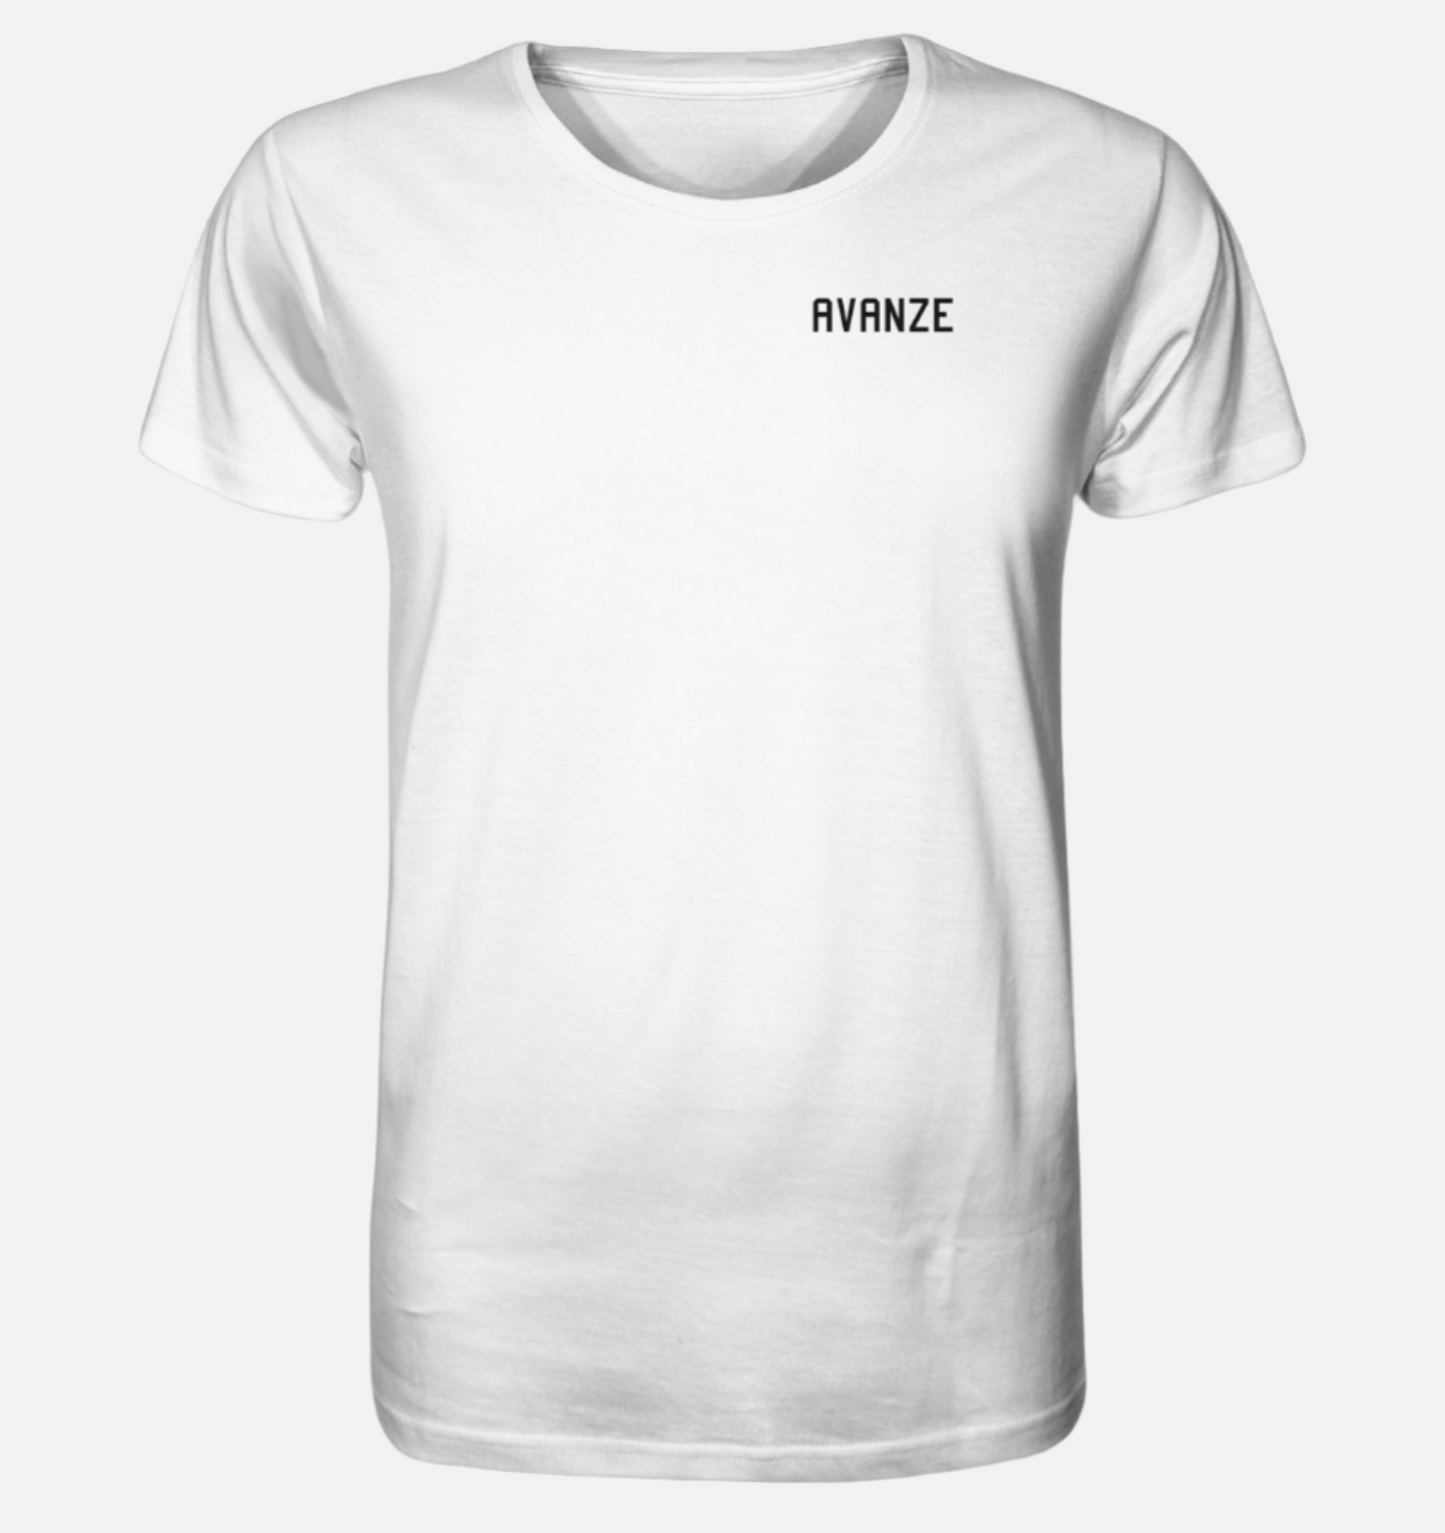 The AVANZE Simple T-Shirt (Blanca)